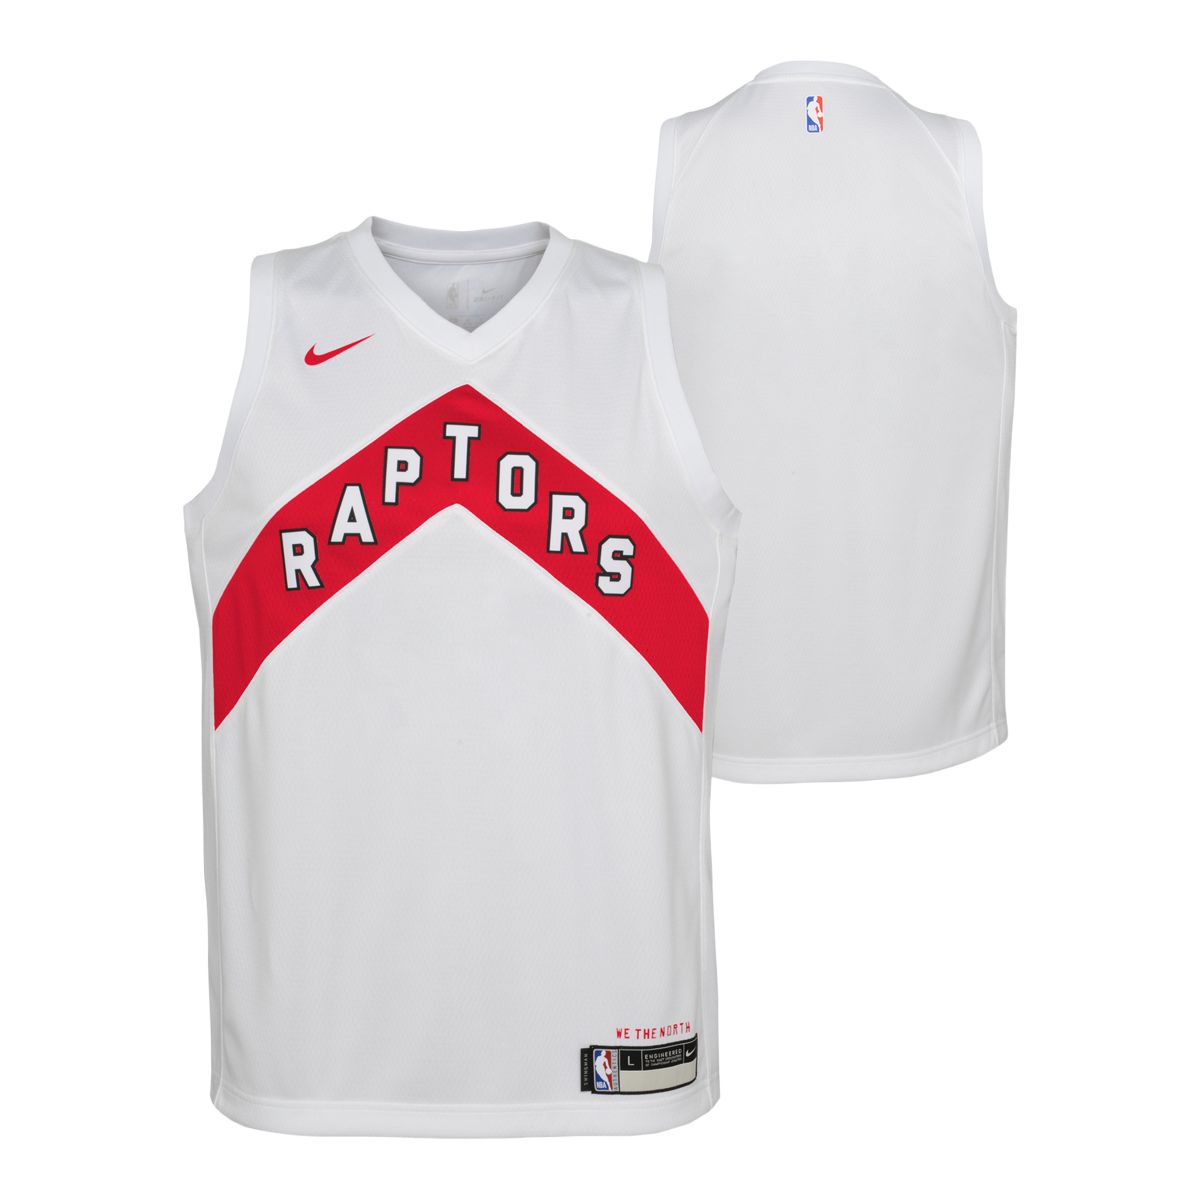 raptors basketball jersey